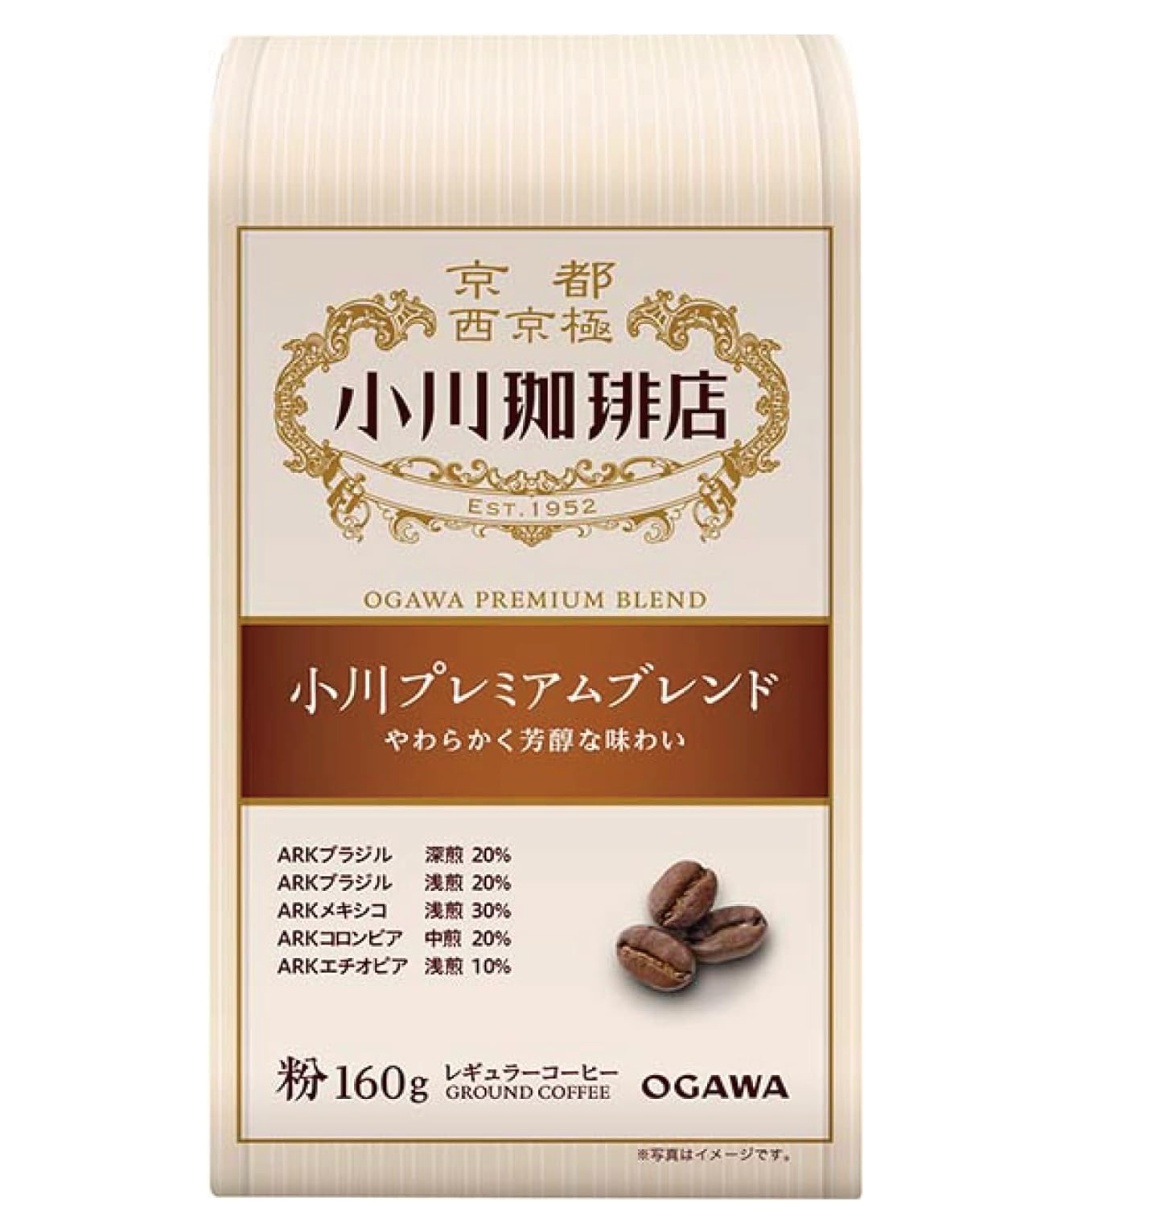 Ogawa Coffee Shop Premium Blend Ground Coffee 180g - Blended Coffee - Premium Coffee